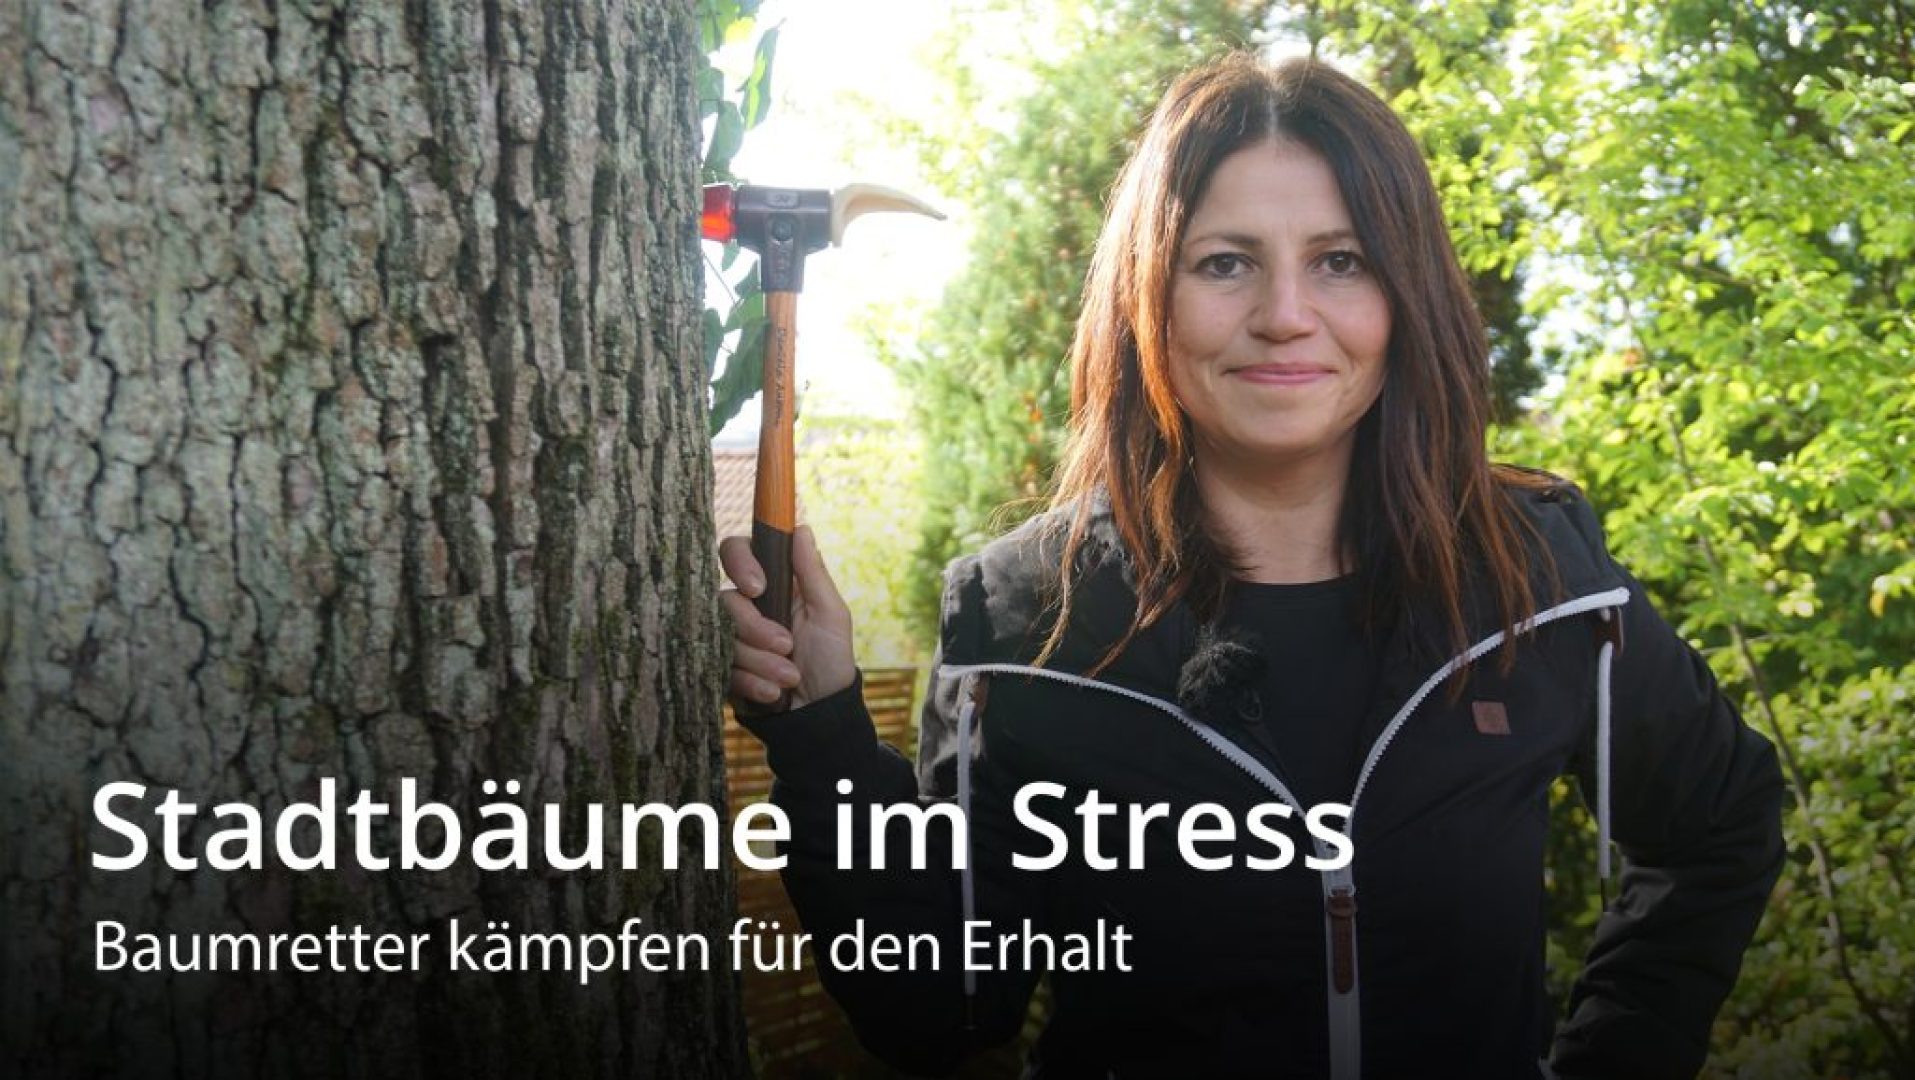 Urban trees under stress